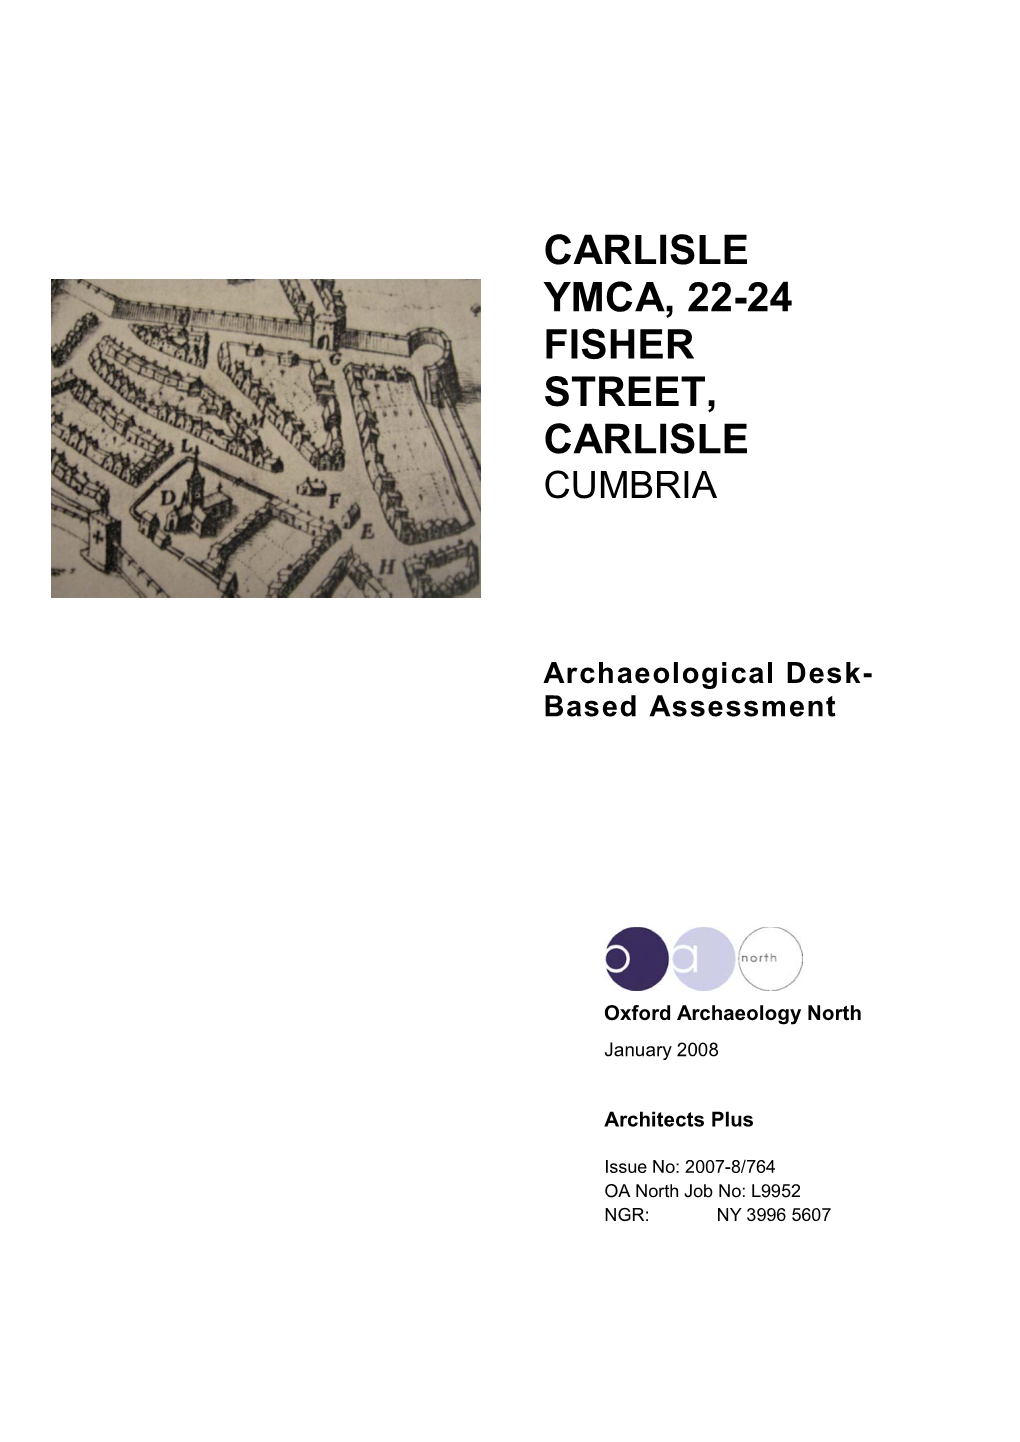 Carlisle Ymca, 22-24 Fisher Street, Carlisle Cumbria